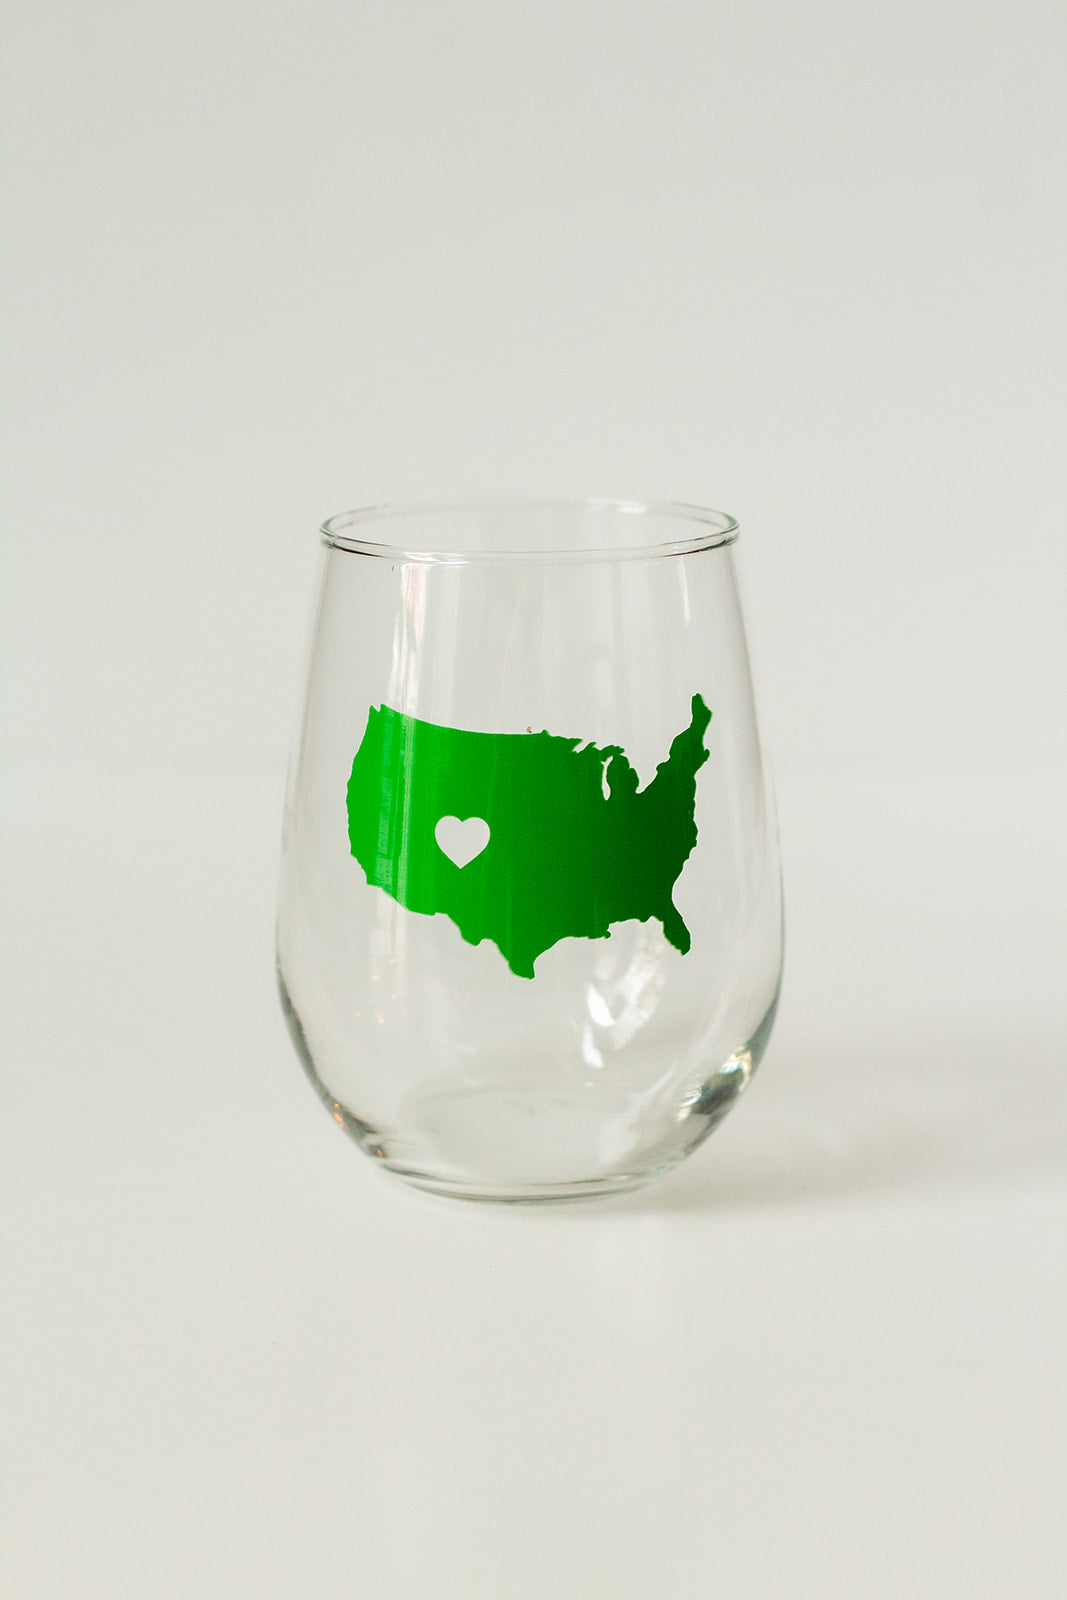 Colorado (CO) Wine Glass